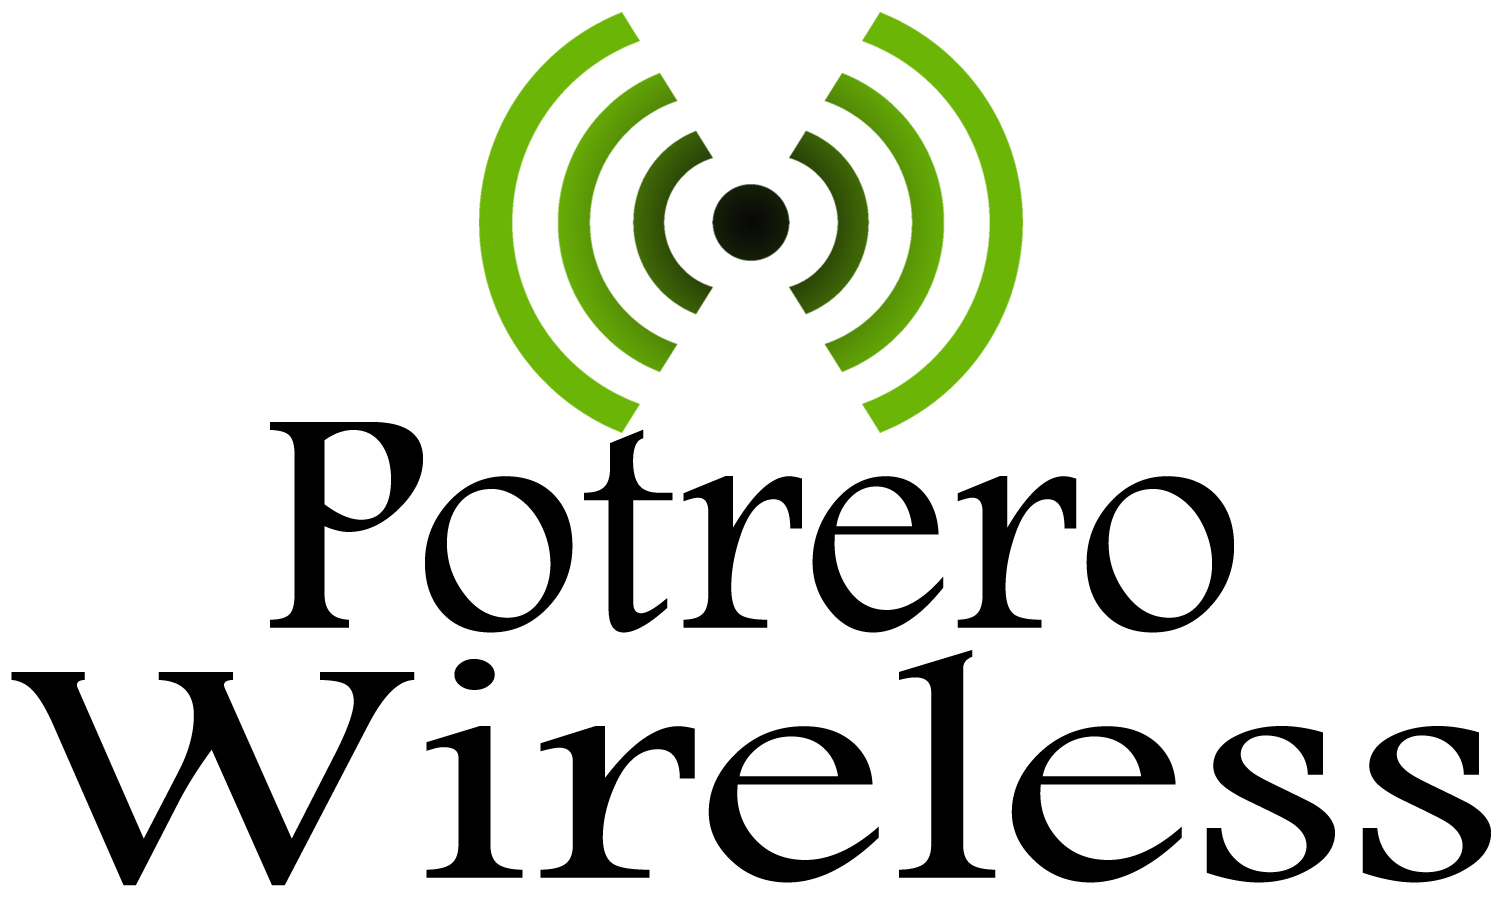 Potrero Wireless